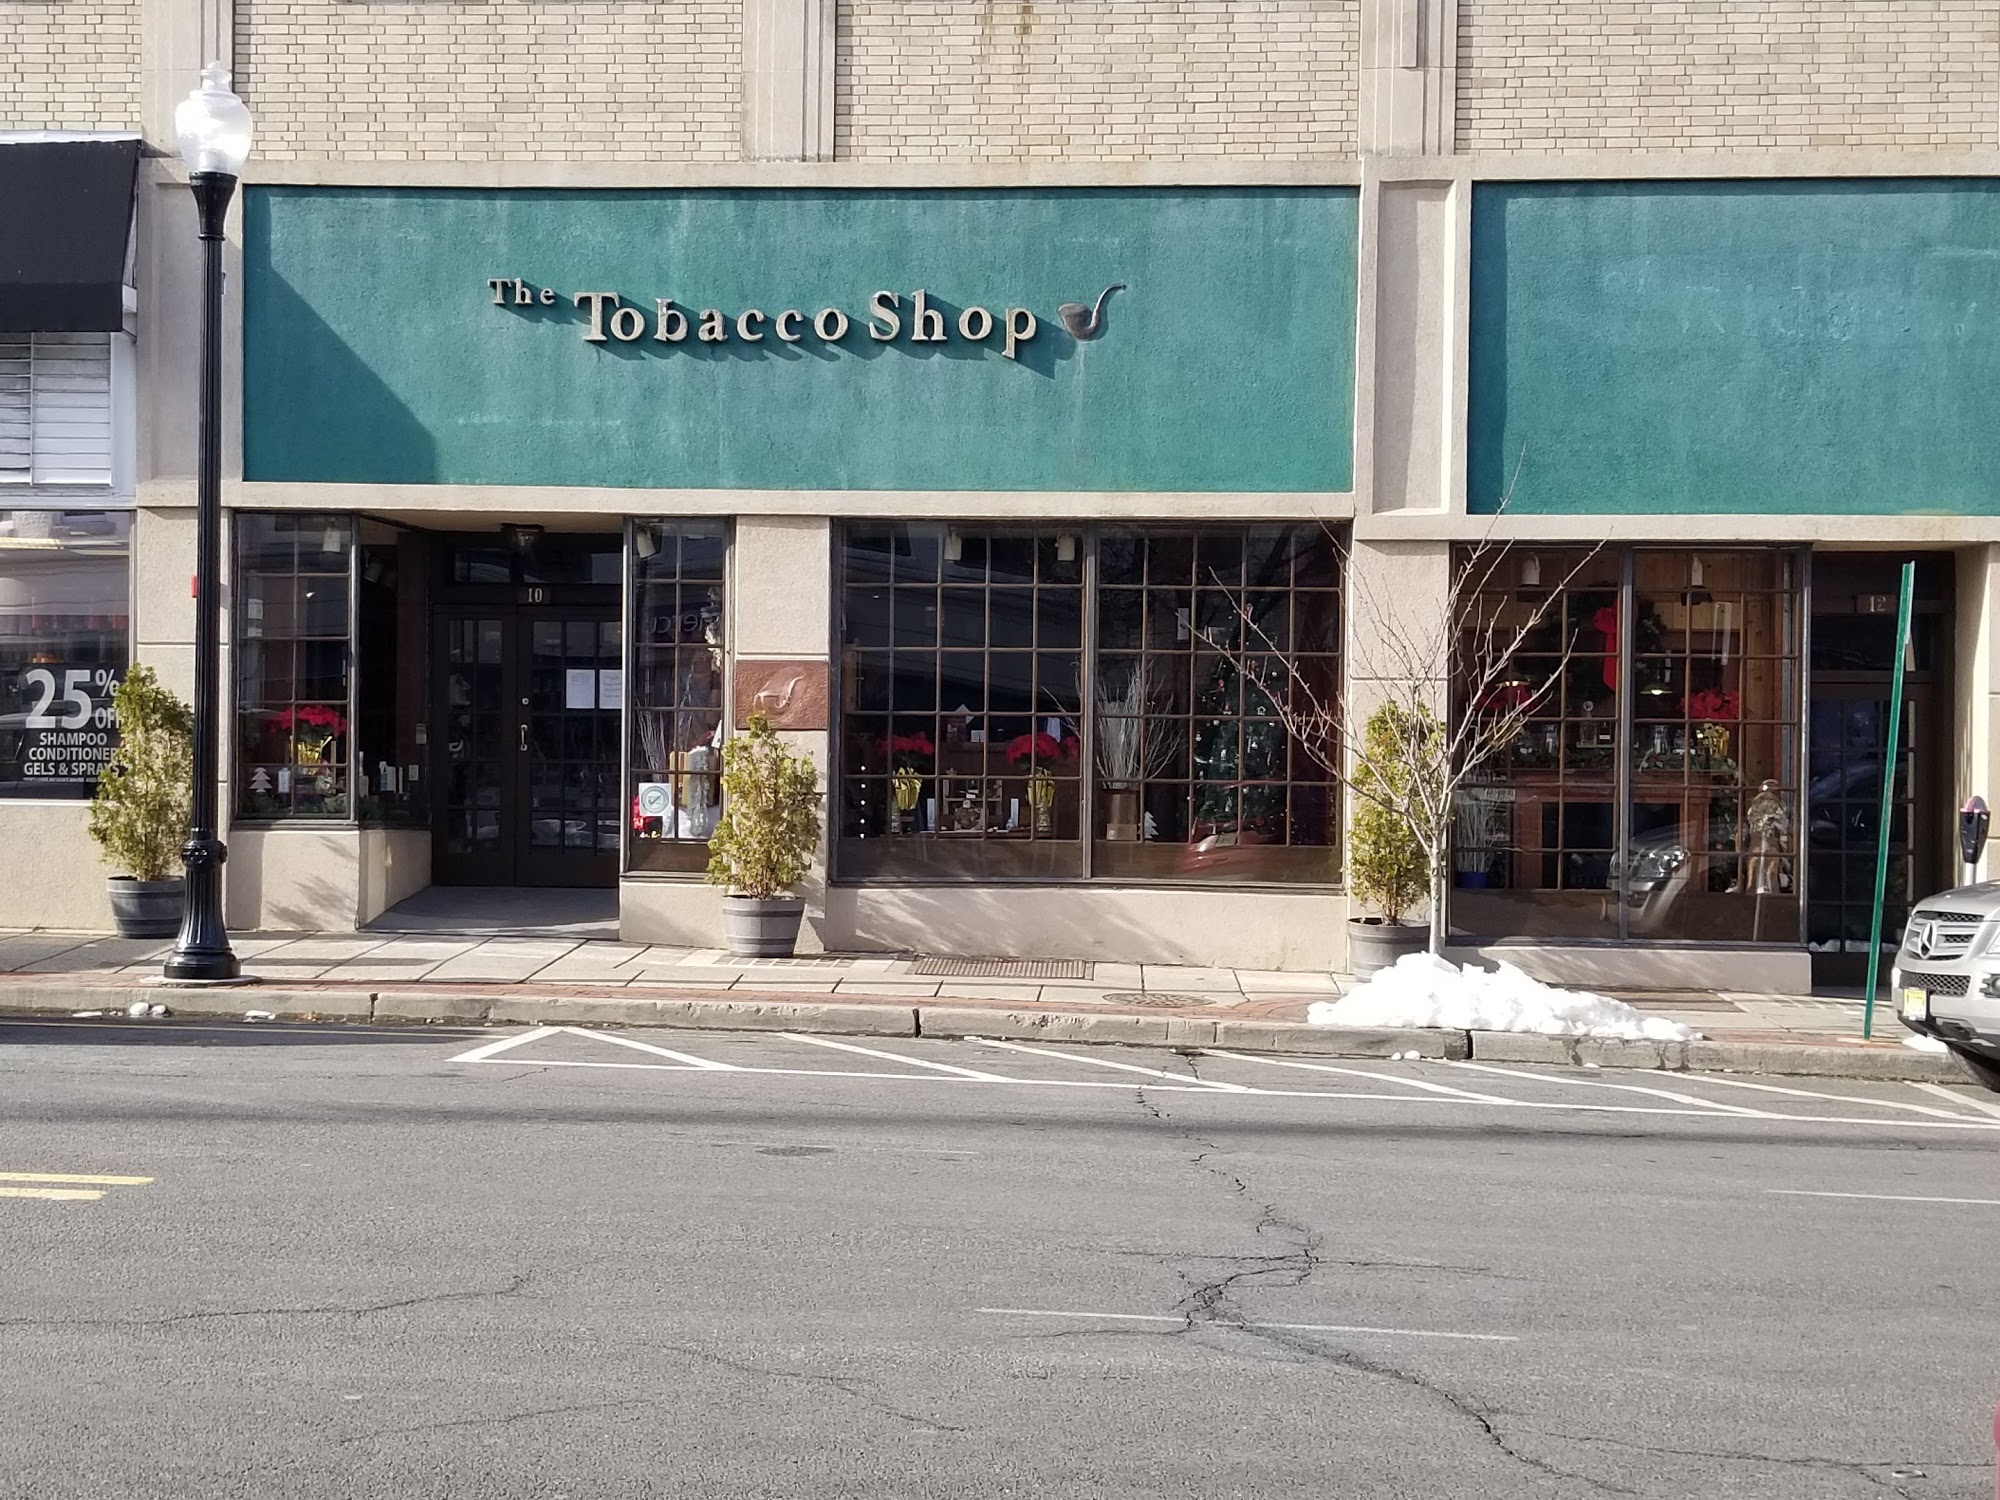 The Tobacco Shop of Ridgewood